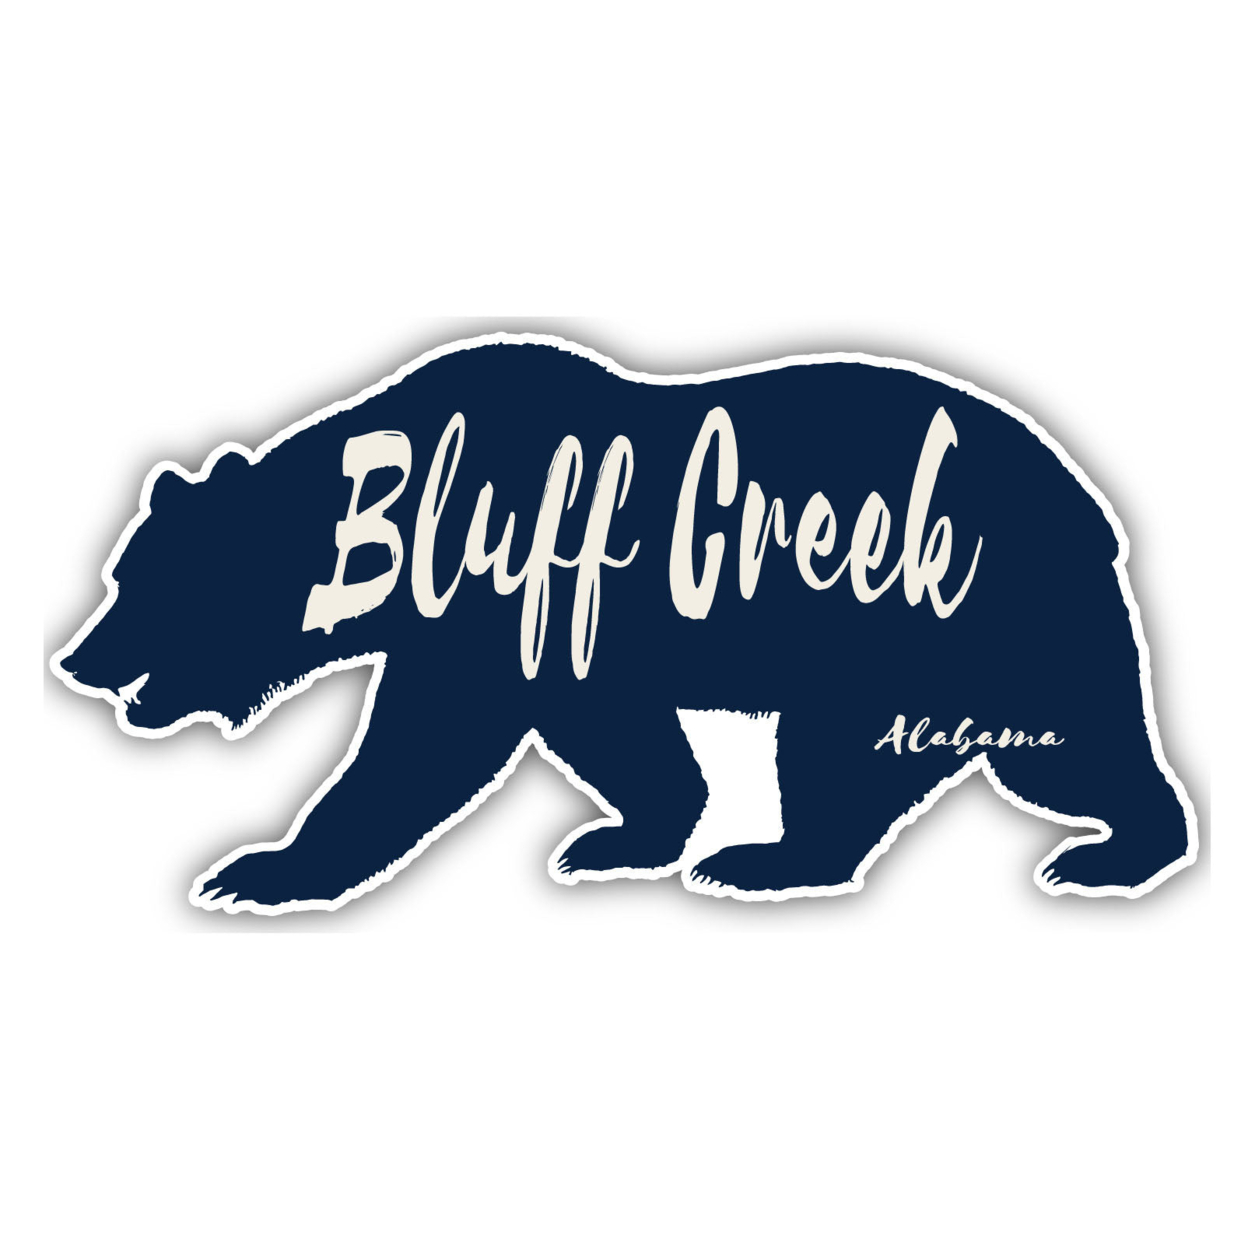 Bluff Creek Alabama Souvenir Decorative Stickers (Choose Theme And Size) - Single Unit, 4-Inch, Bear